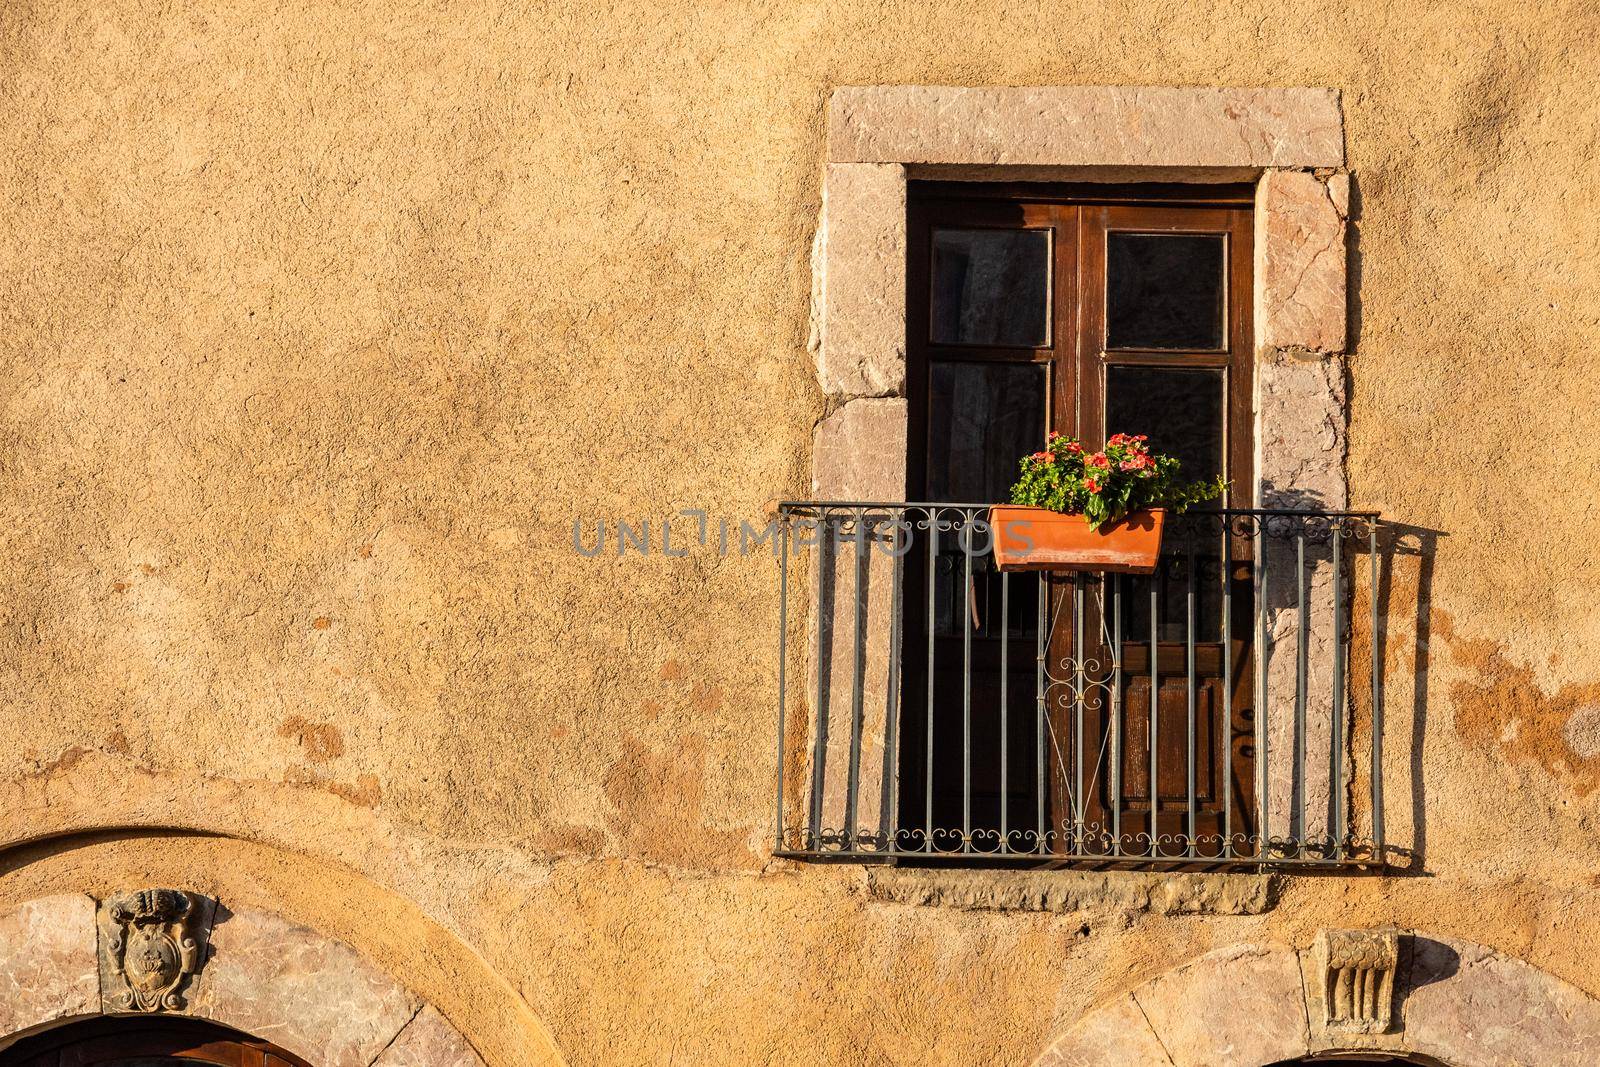 Balcony of an old house illuminated by the sun, Sicily, Italy by mauricallari